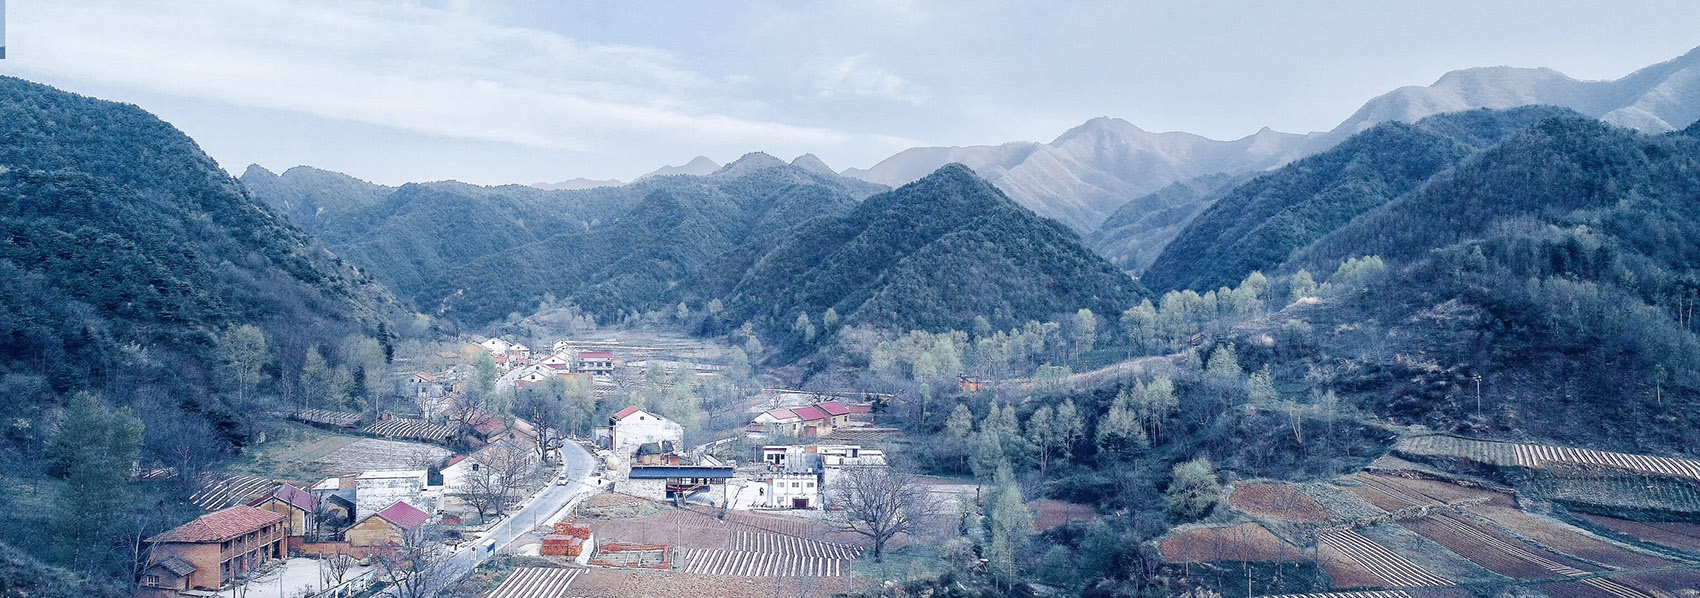 014-the-landscape-design-of-youfangping-village-china-by-china-northwest-archite.jpg